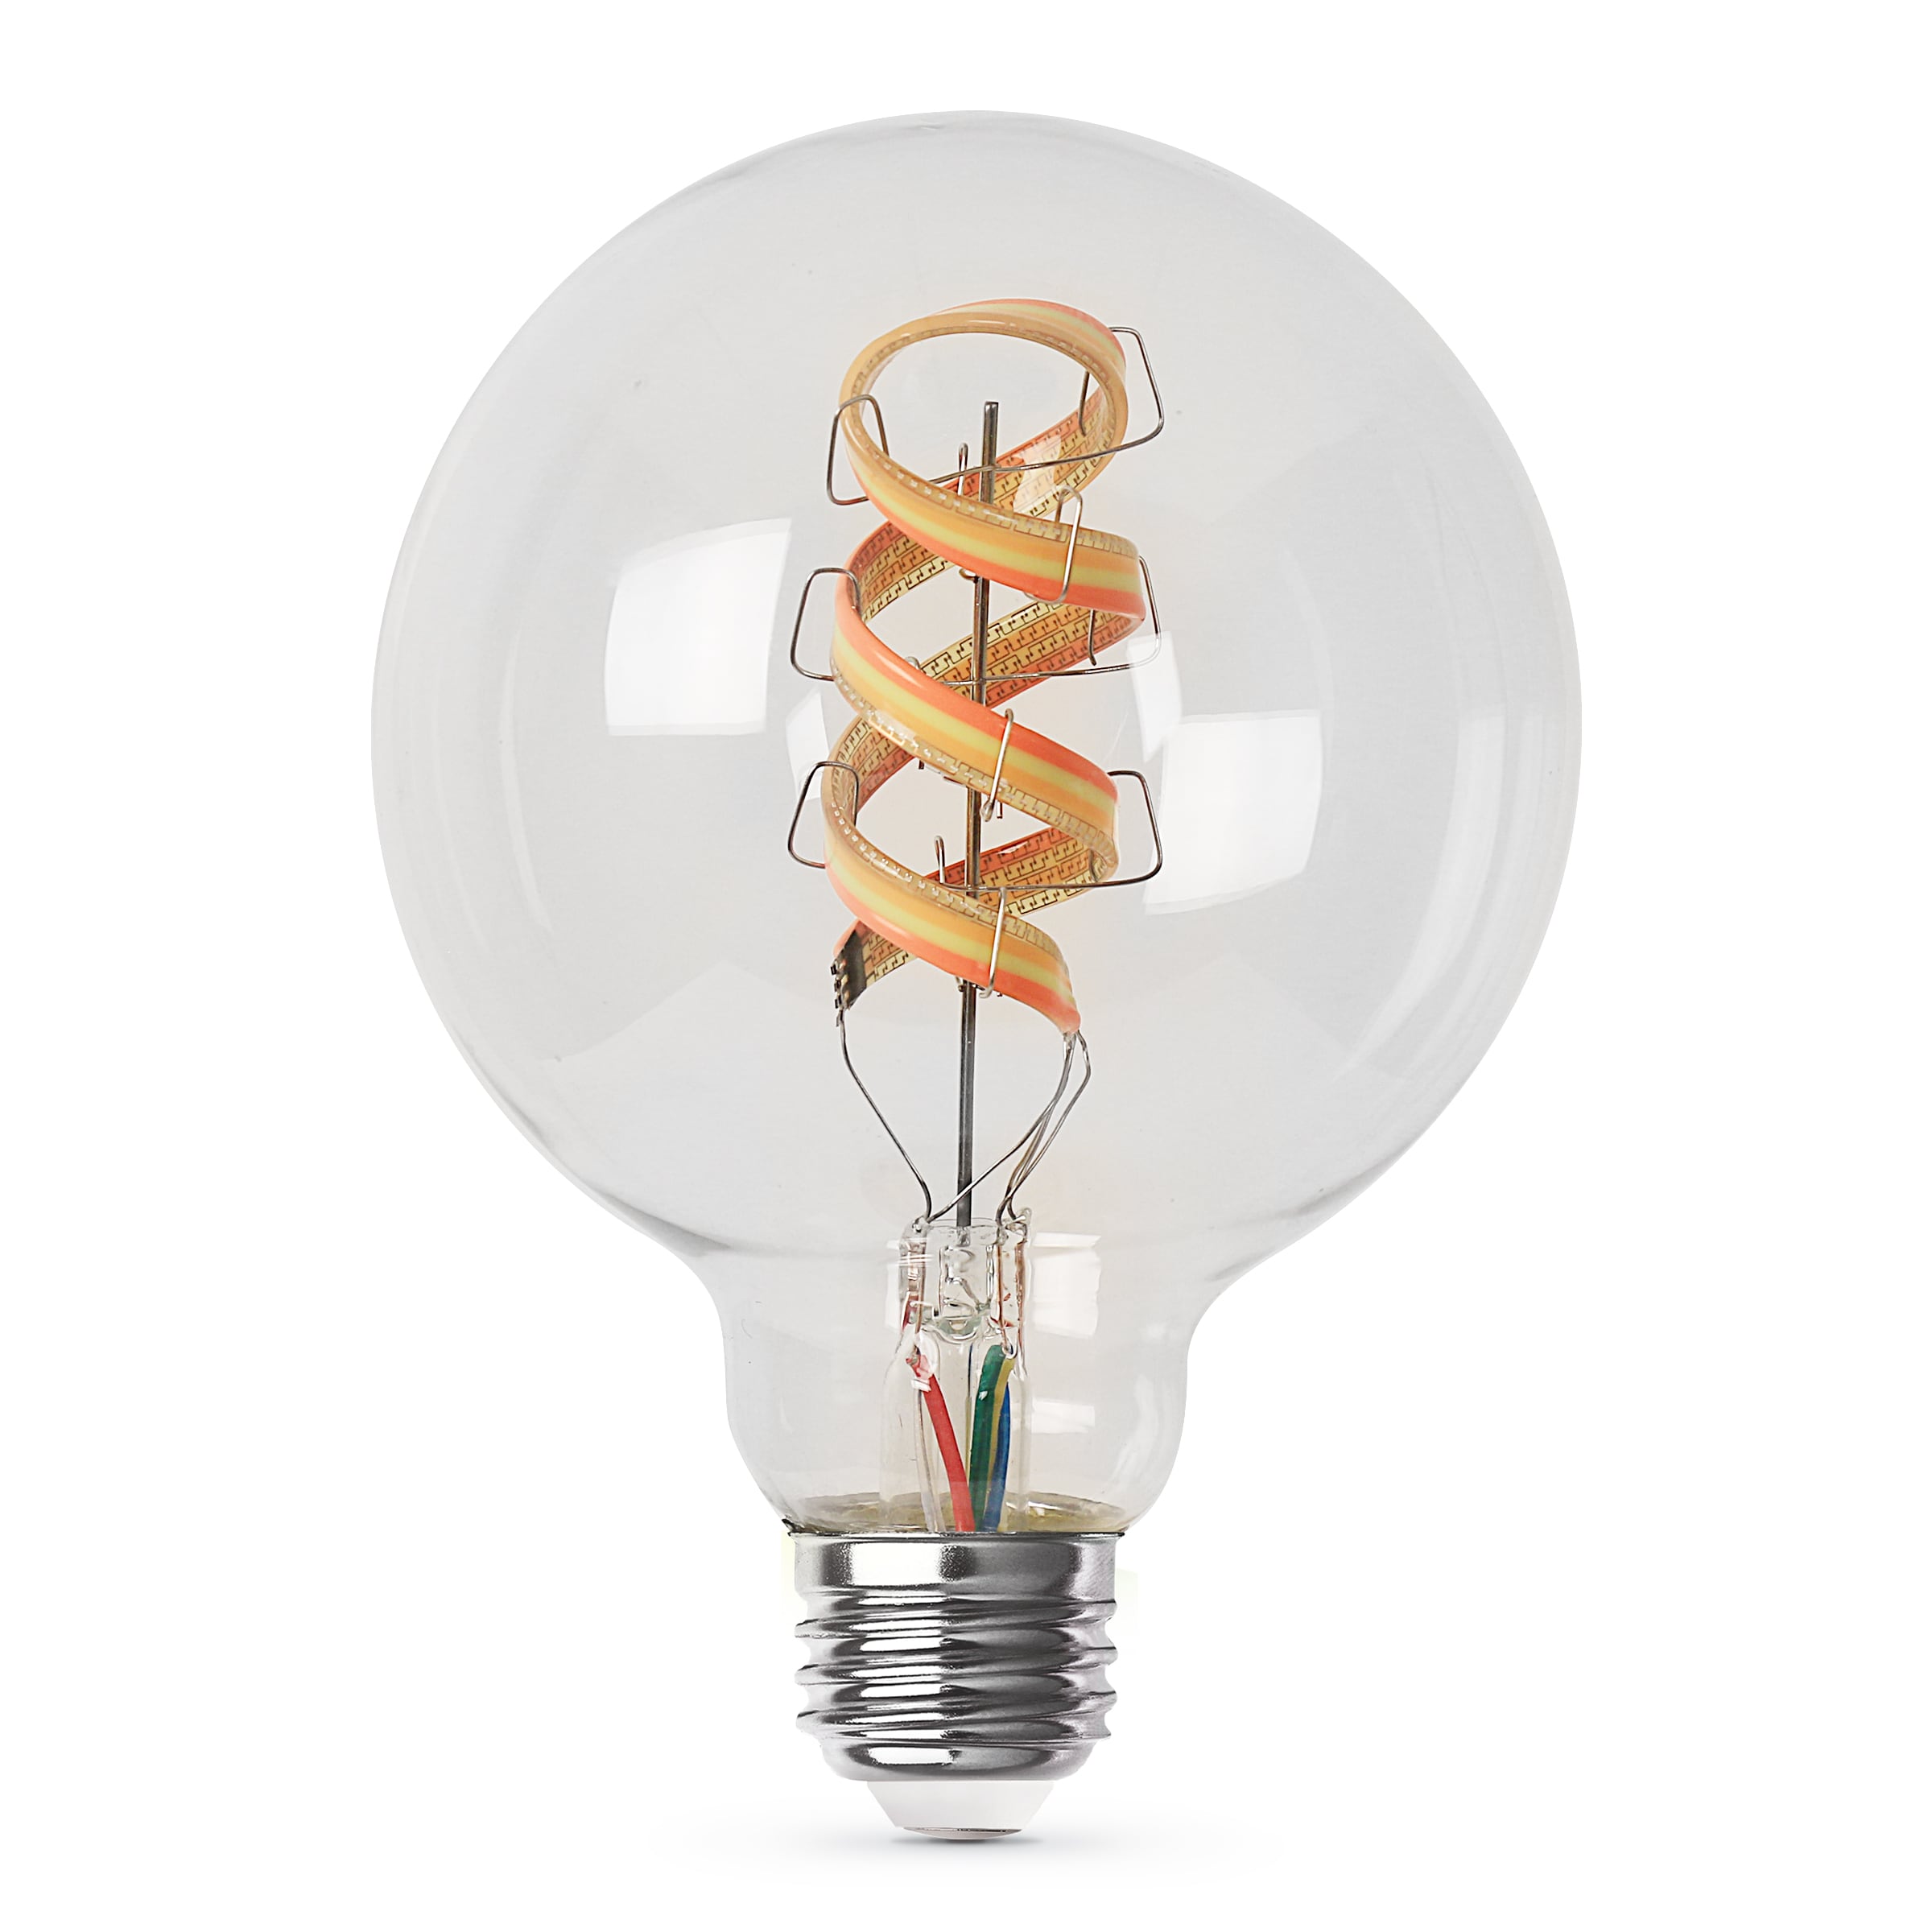 Feit Electric Feit smart bulb 60-Watt EQ Soft White Medium Base (e-26) Dimmable Smart Light Bulb at